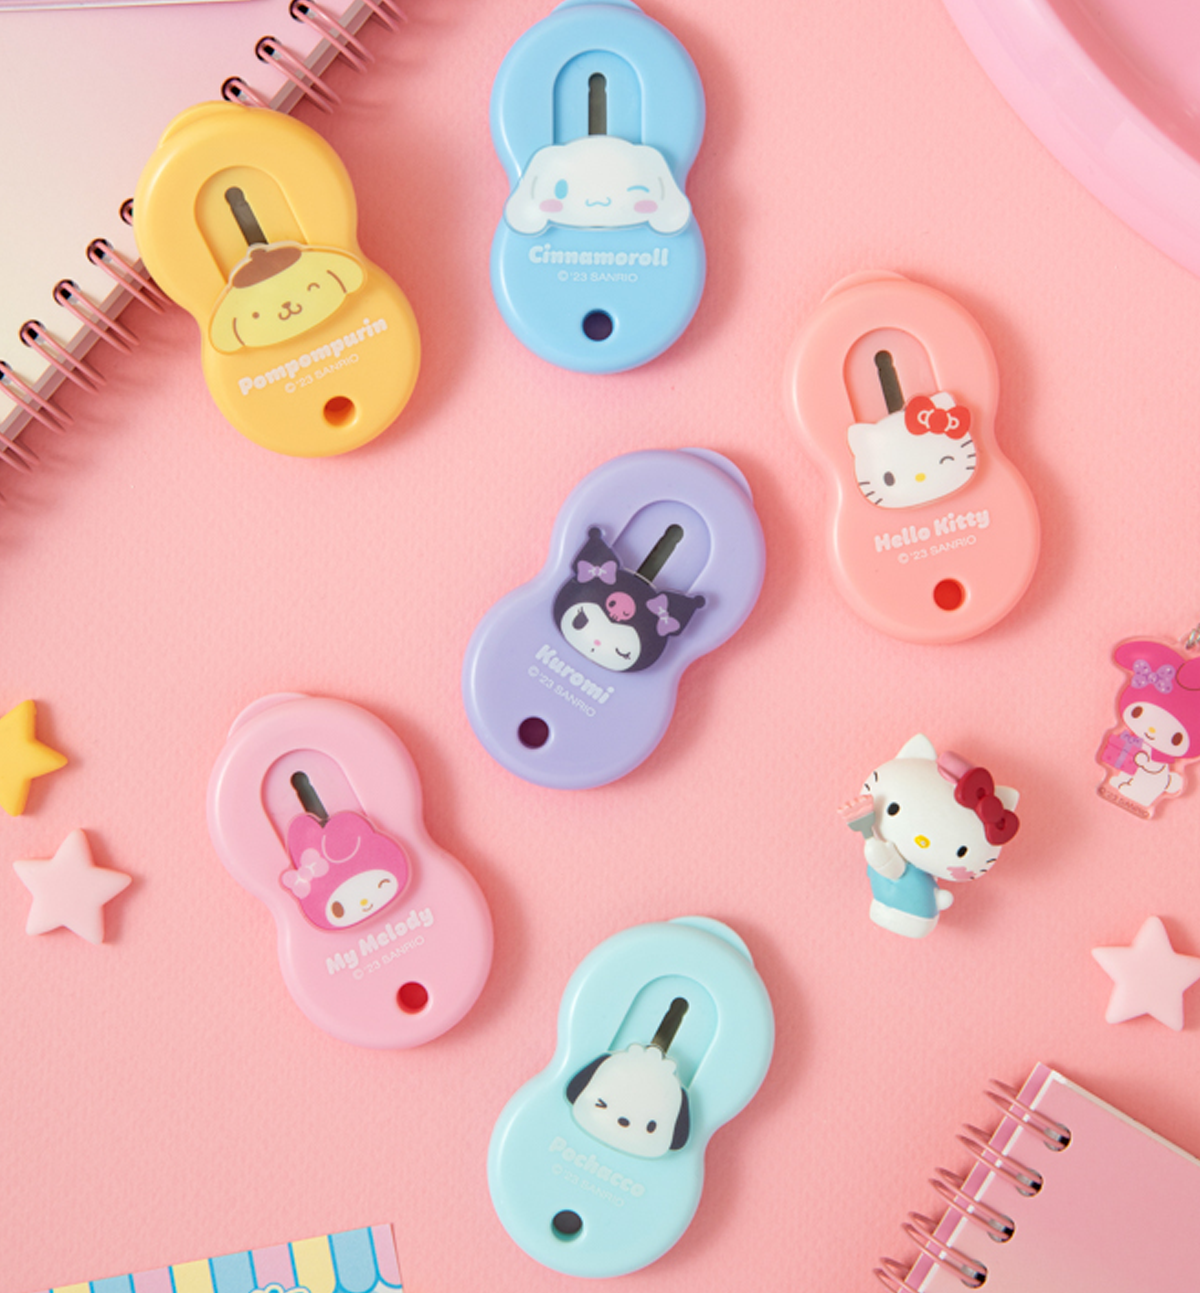 Original Sanrio Hello Kitty Pencil Bags Case Kuromi My Melody Cinnamoroll Cartoon Stationery Box Kids School Supplies Korean, Red